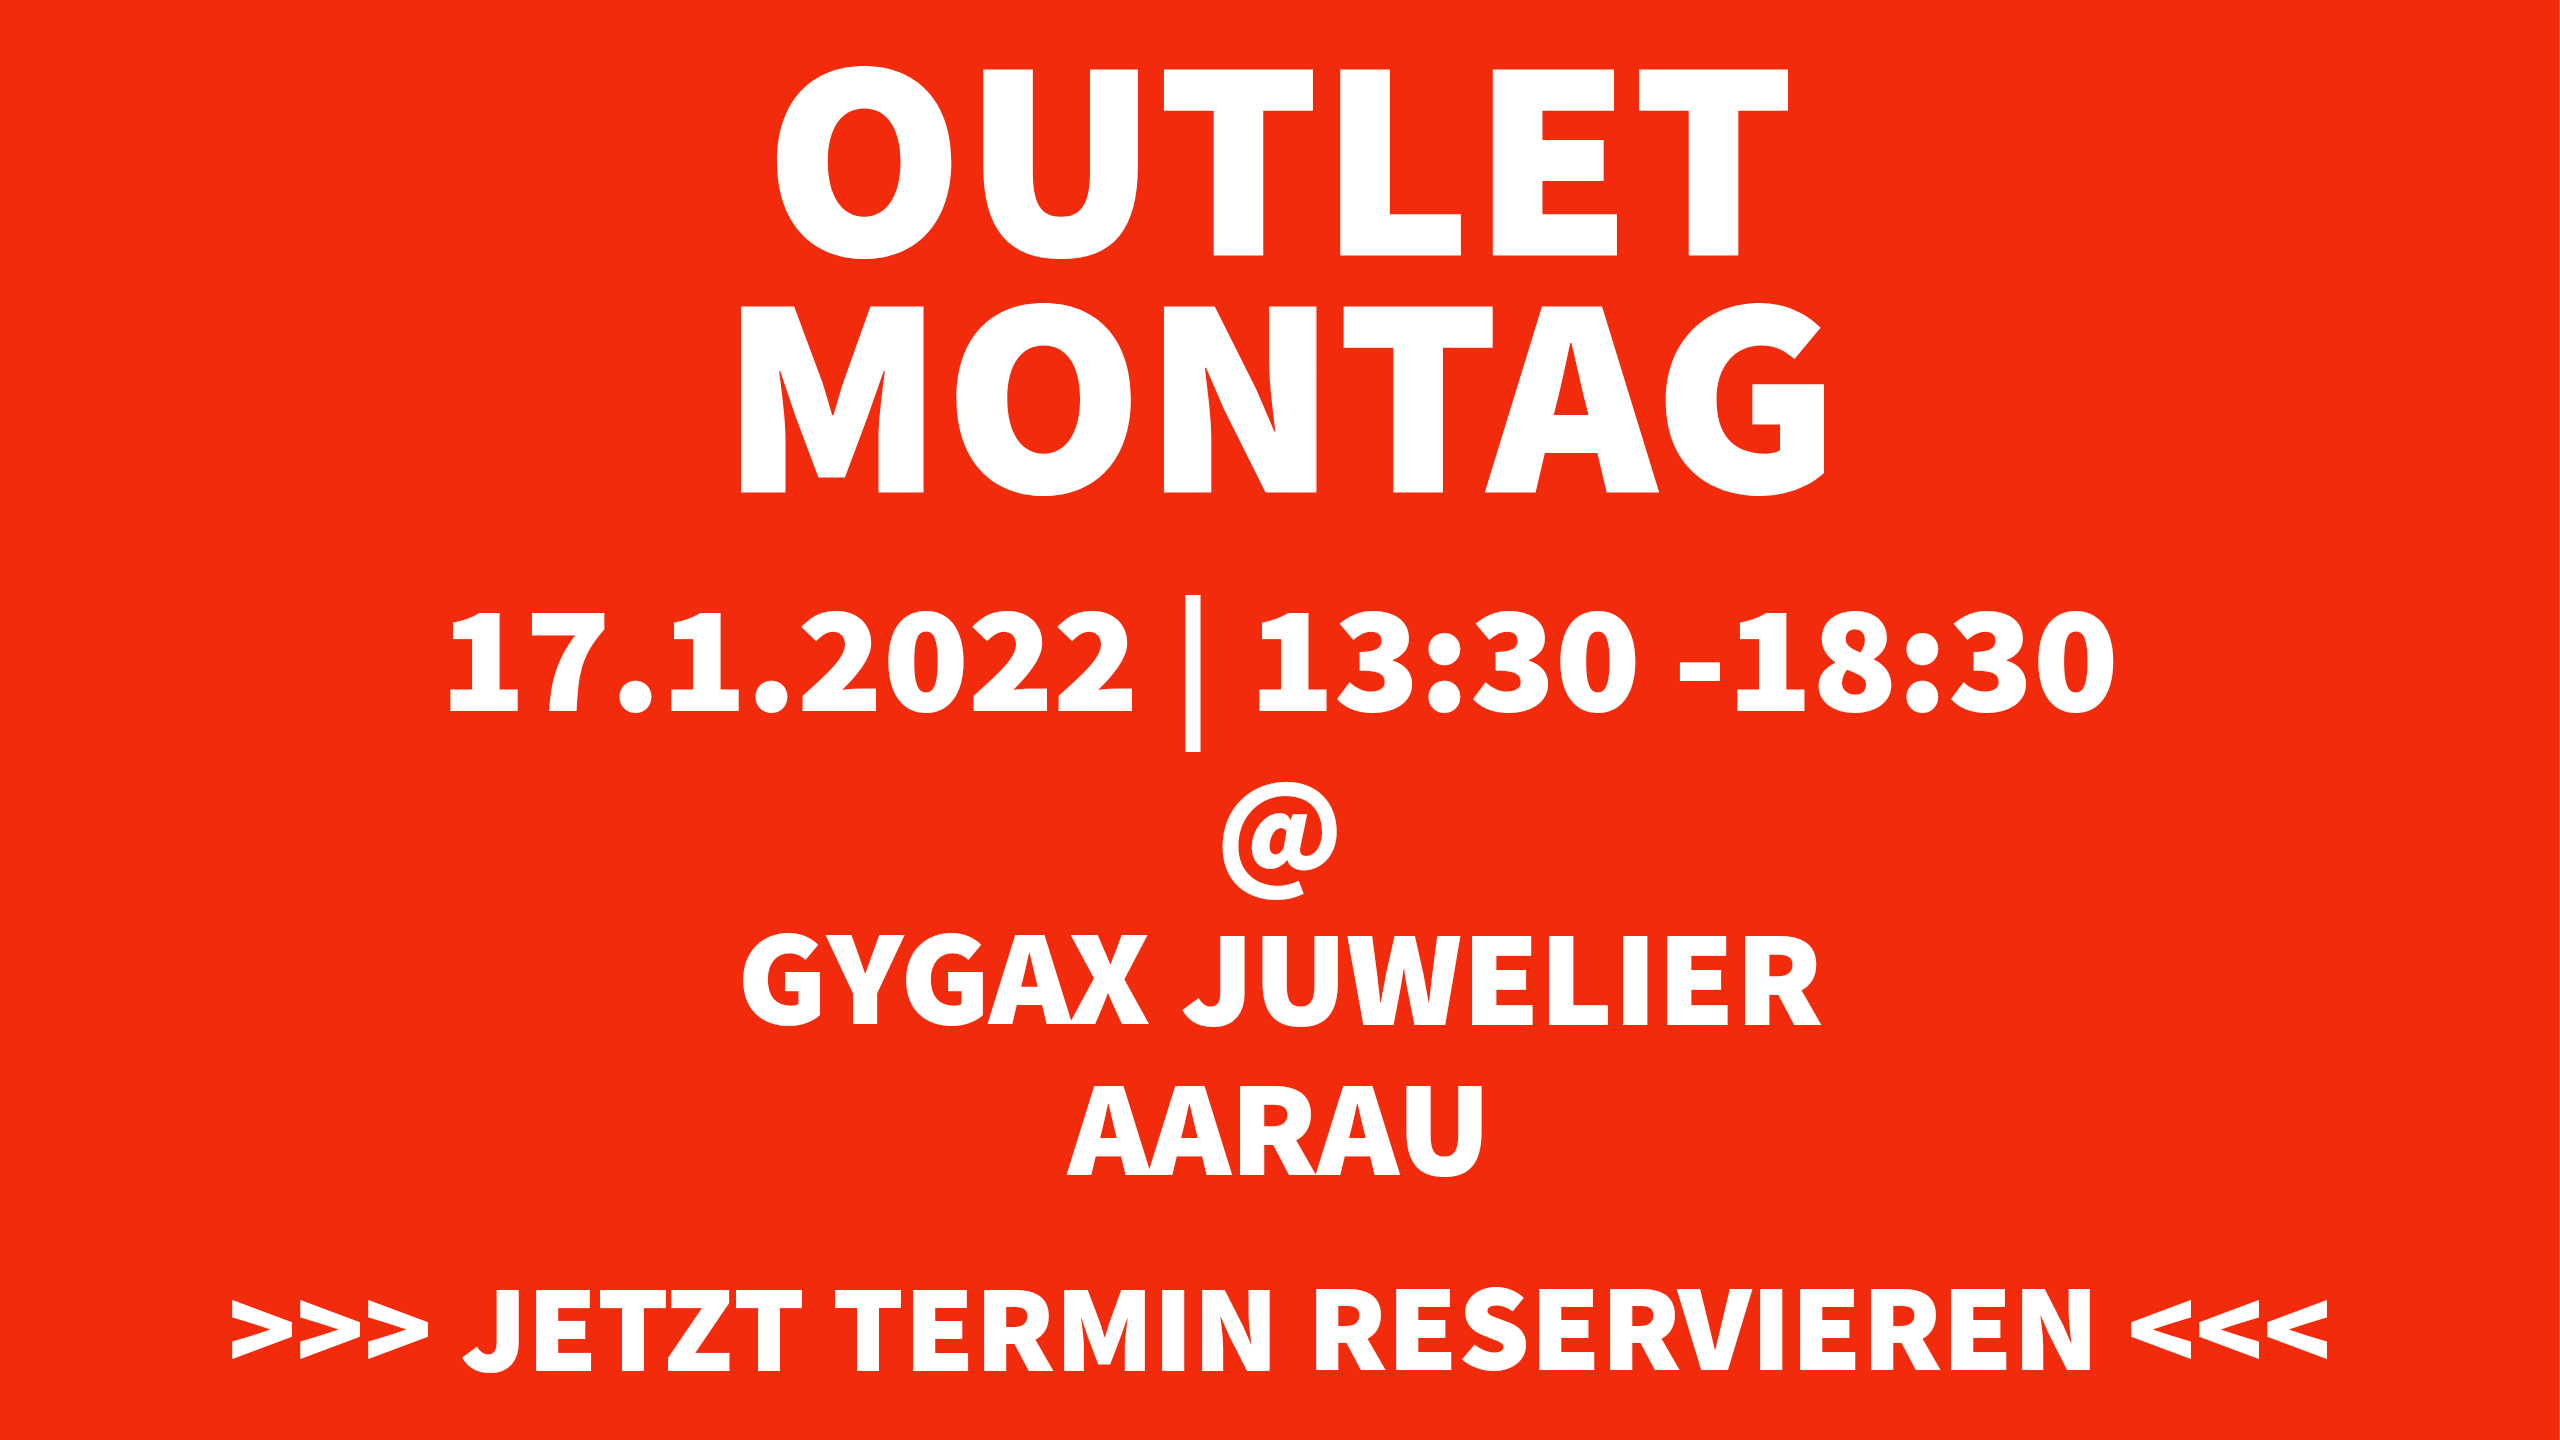 Outlet Montag im Outlet Club von Gygax Juwelier Aarau